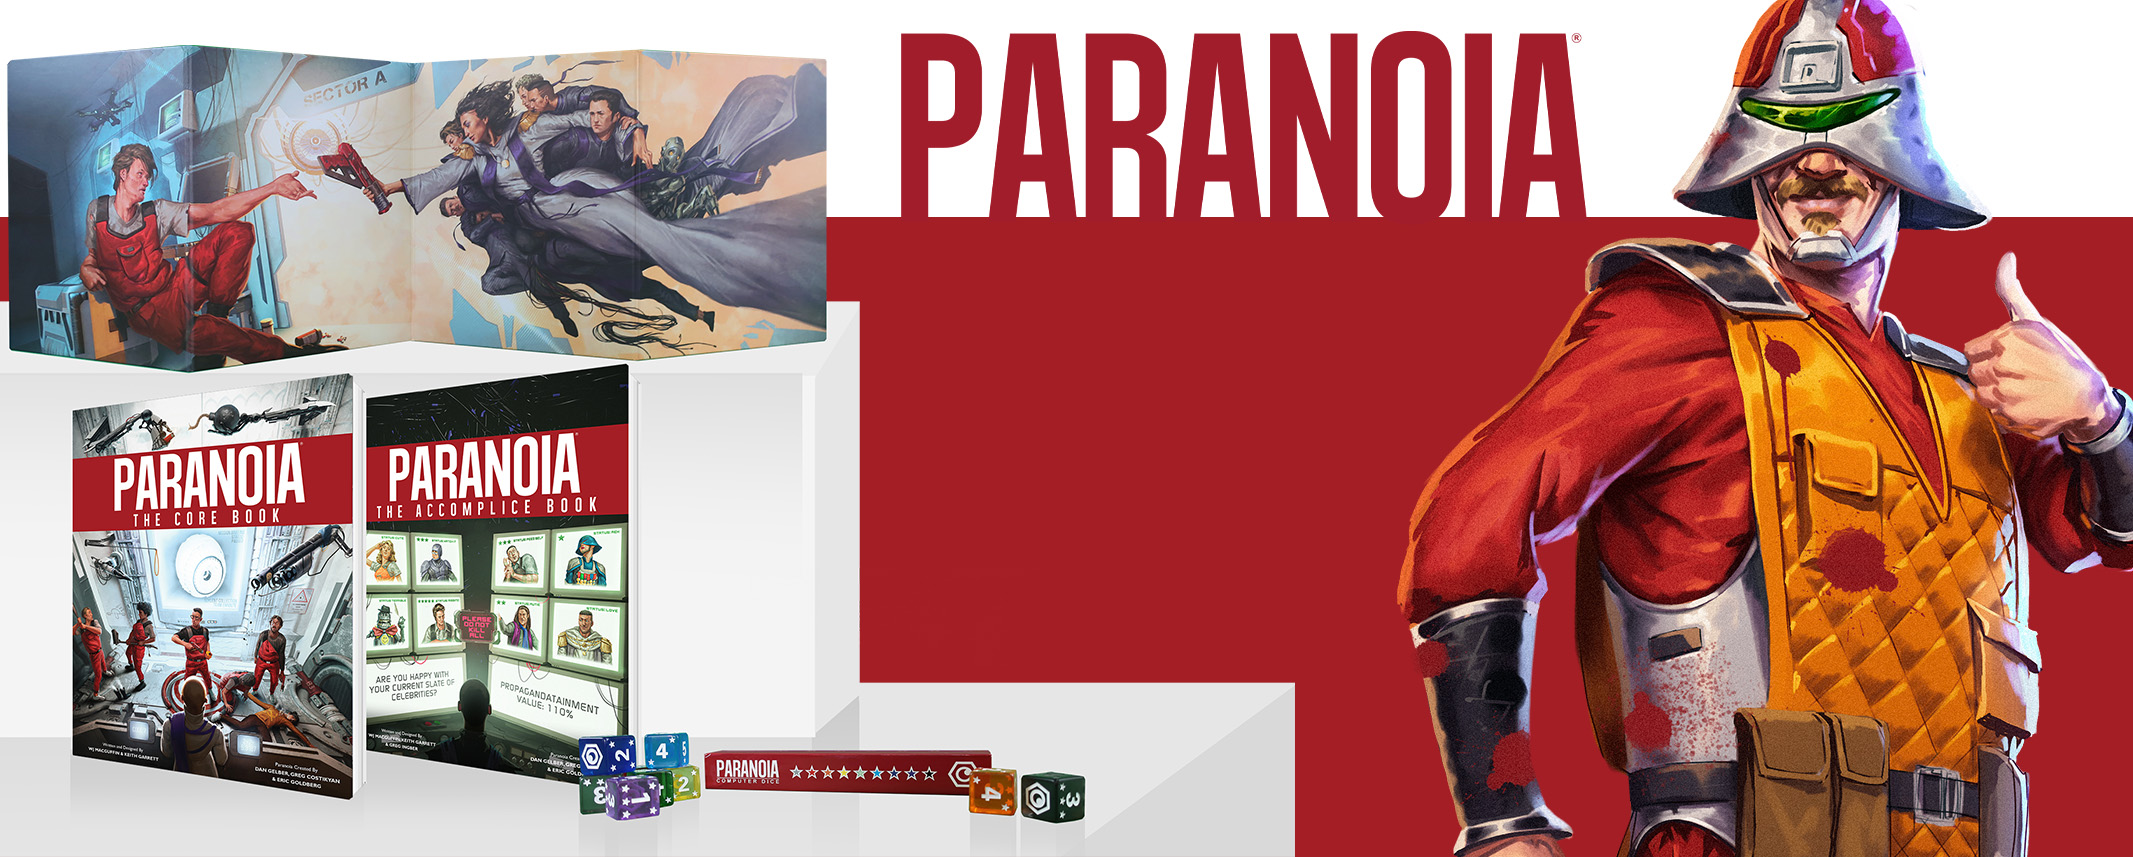 Paranoia Release Banner 2.jpg